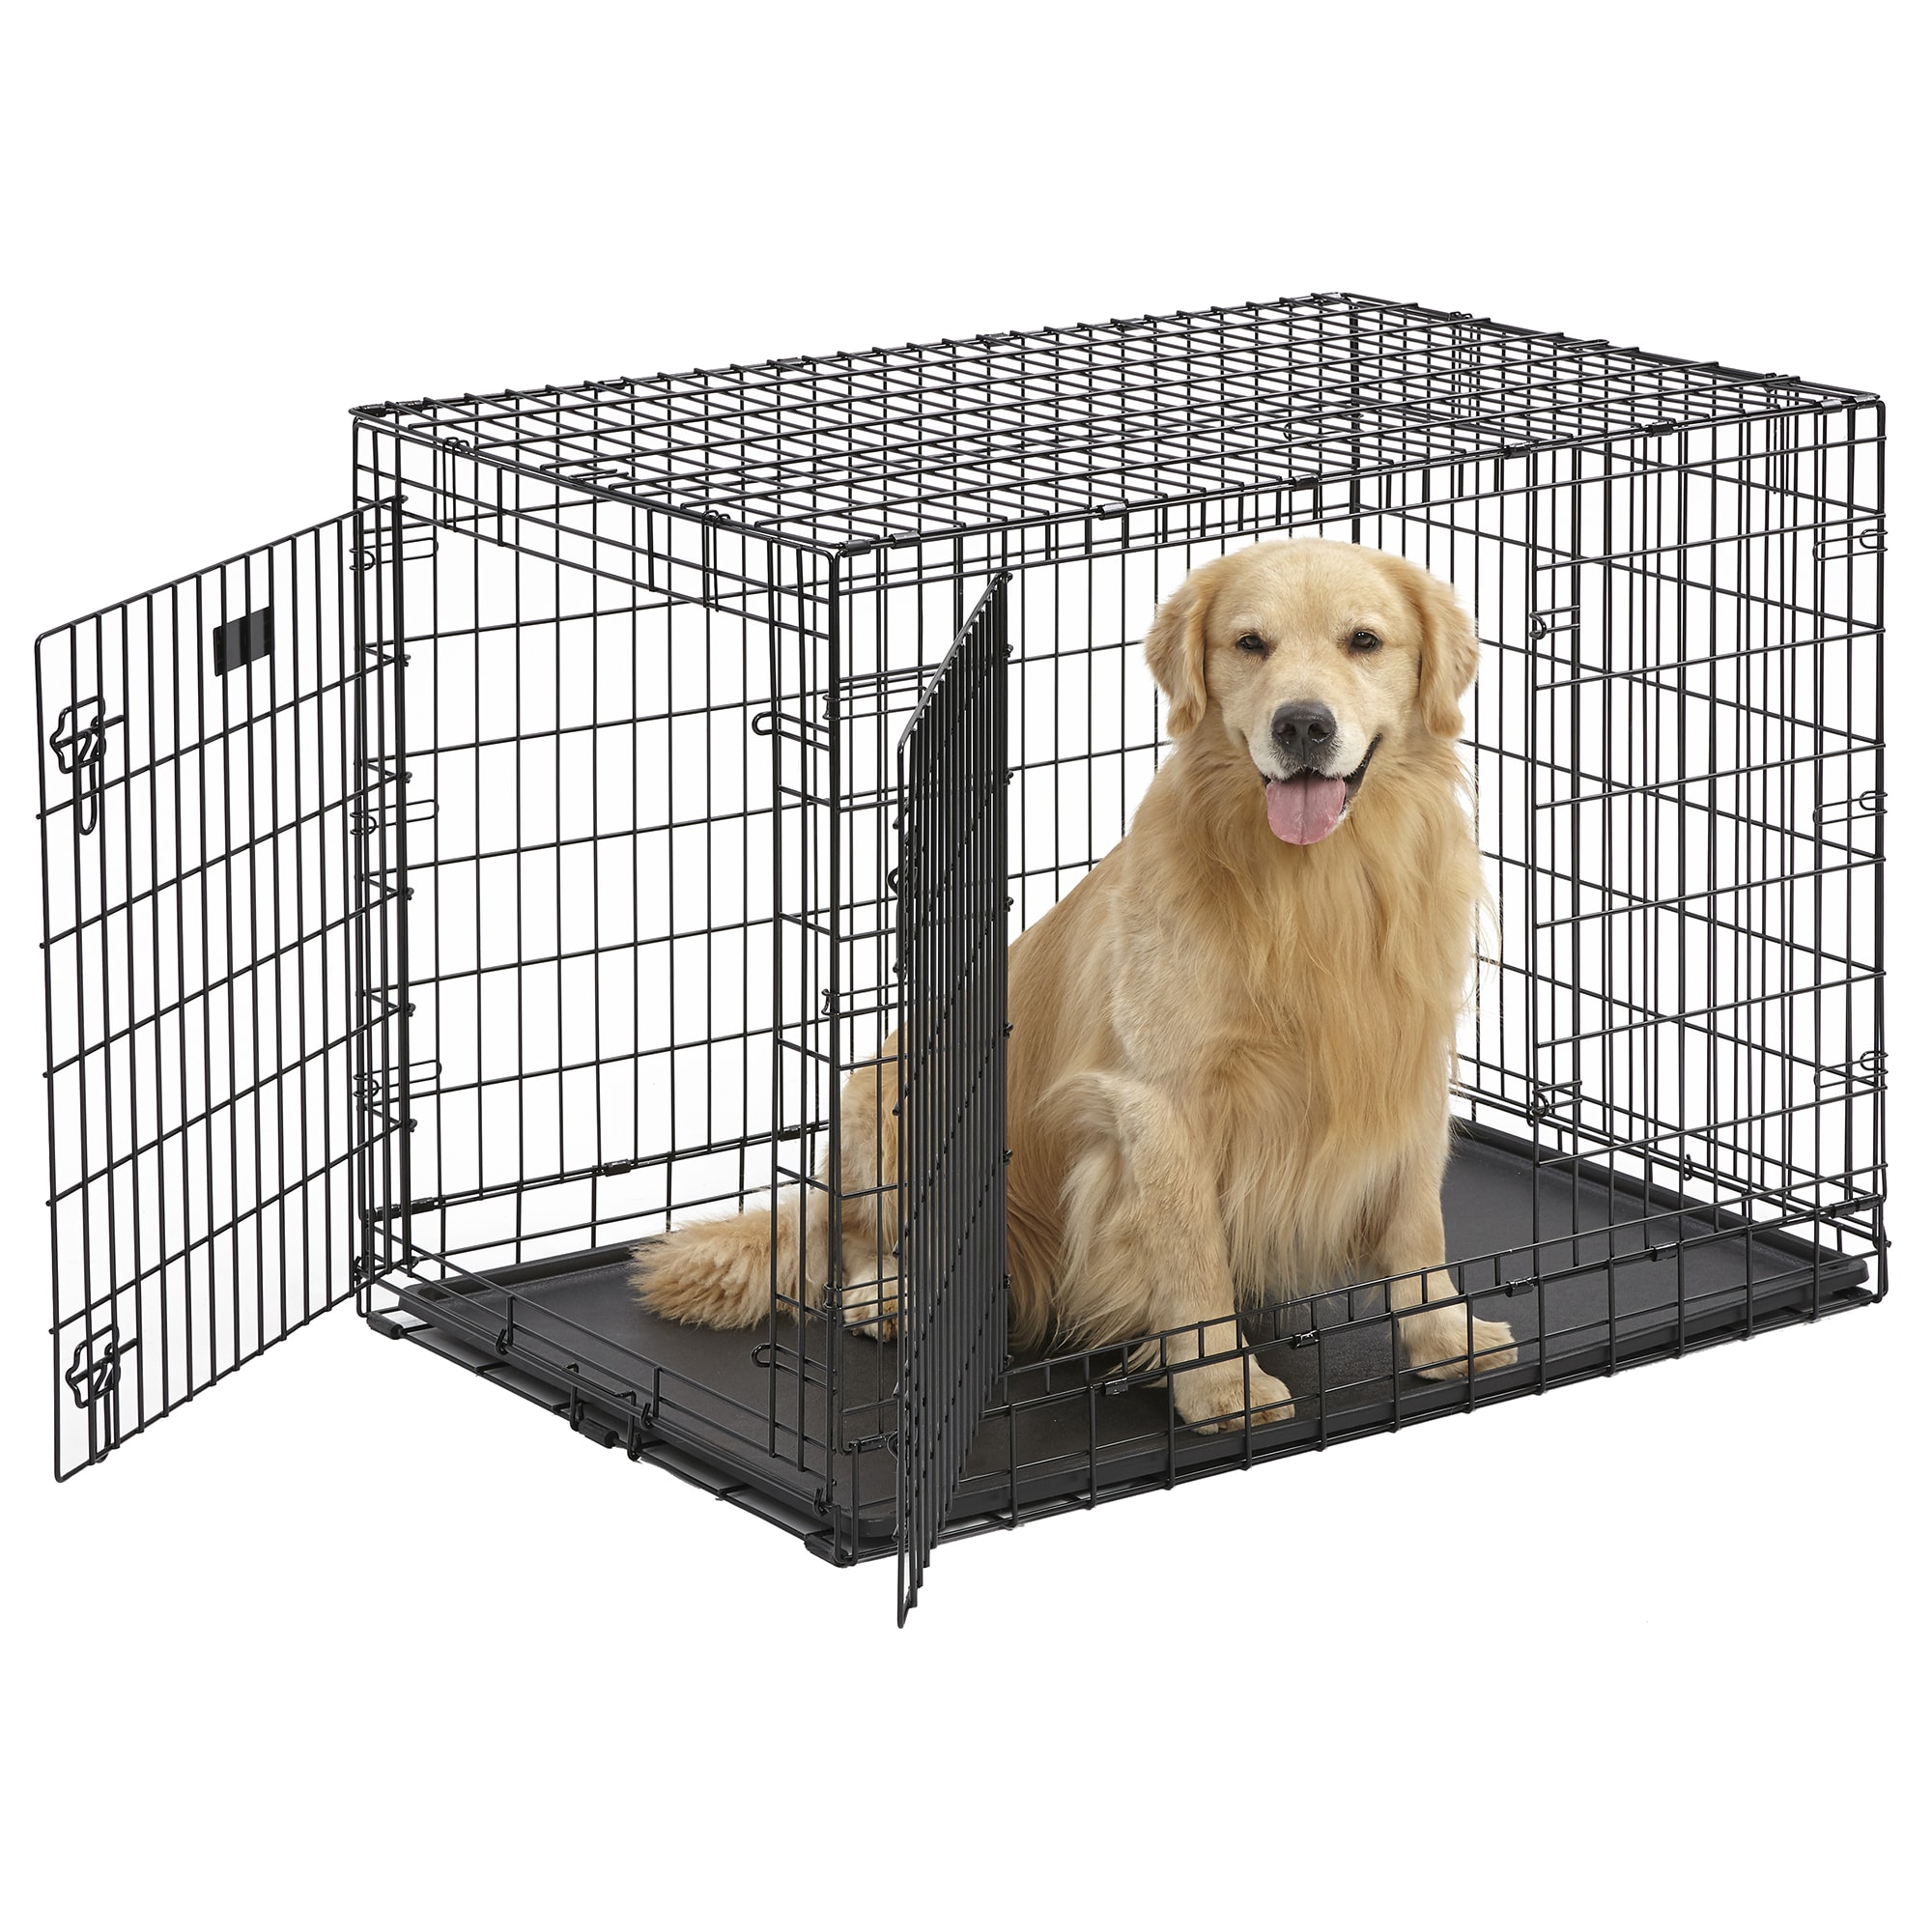 32 inch dog crate